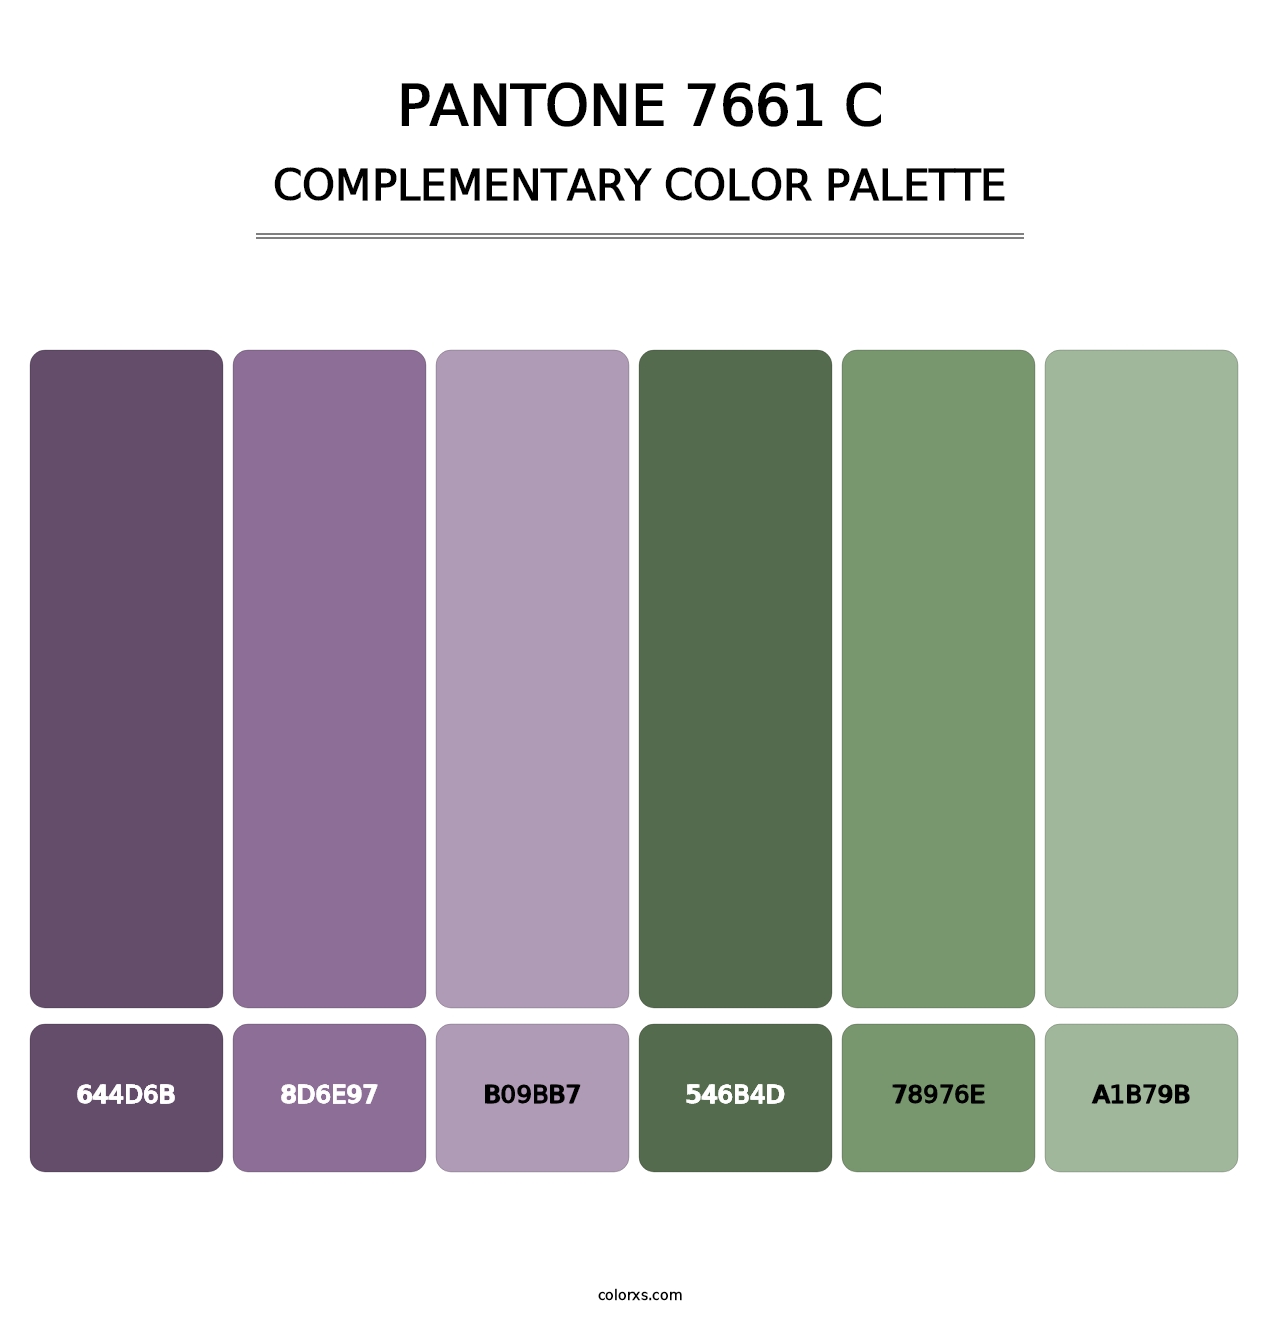 PANTONE 7661 C - Complementary Color Palette